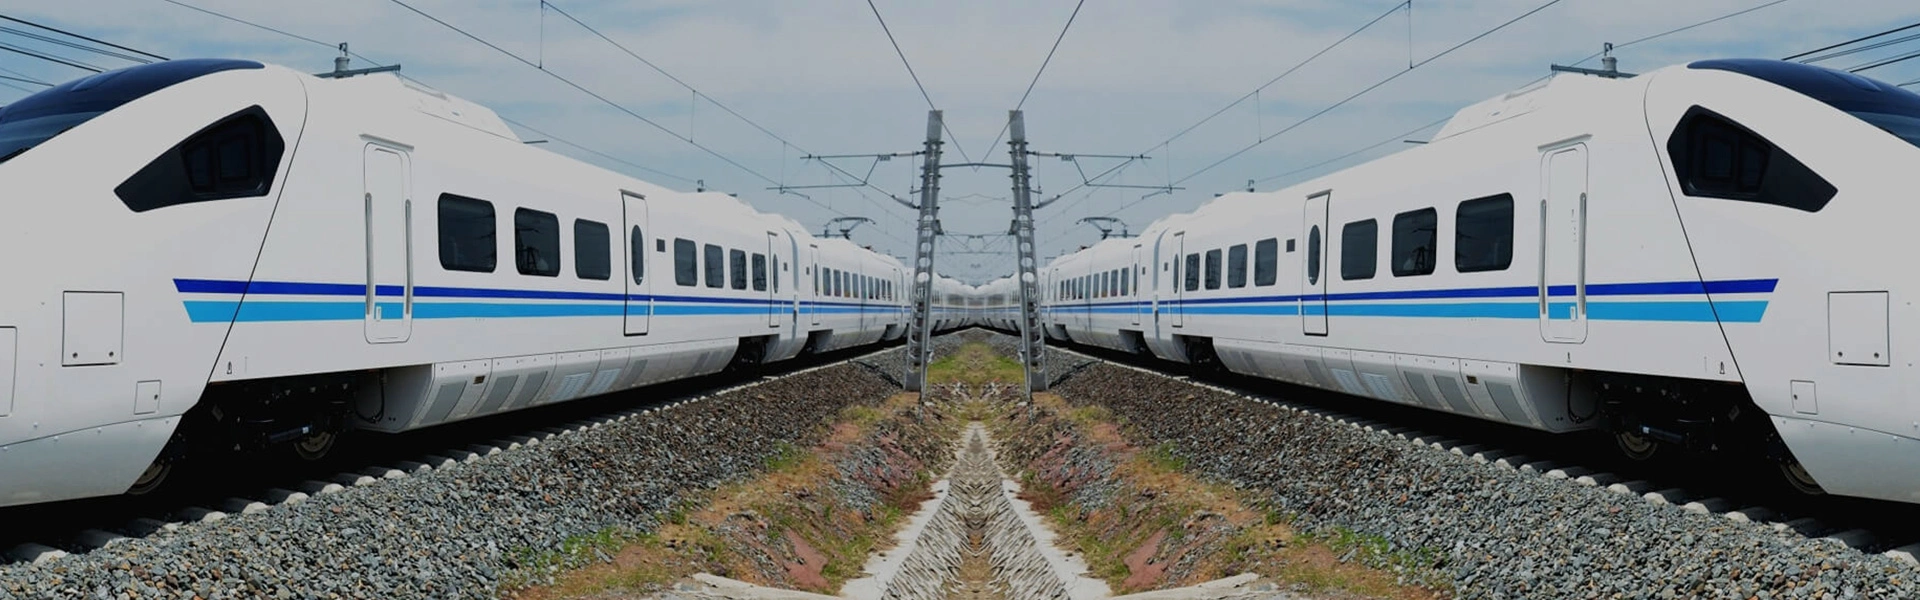 Industrial Fasteners Applicated in Rail & Locomotive